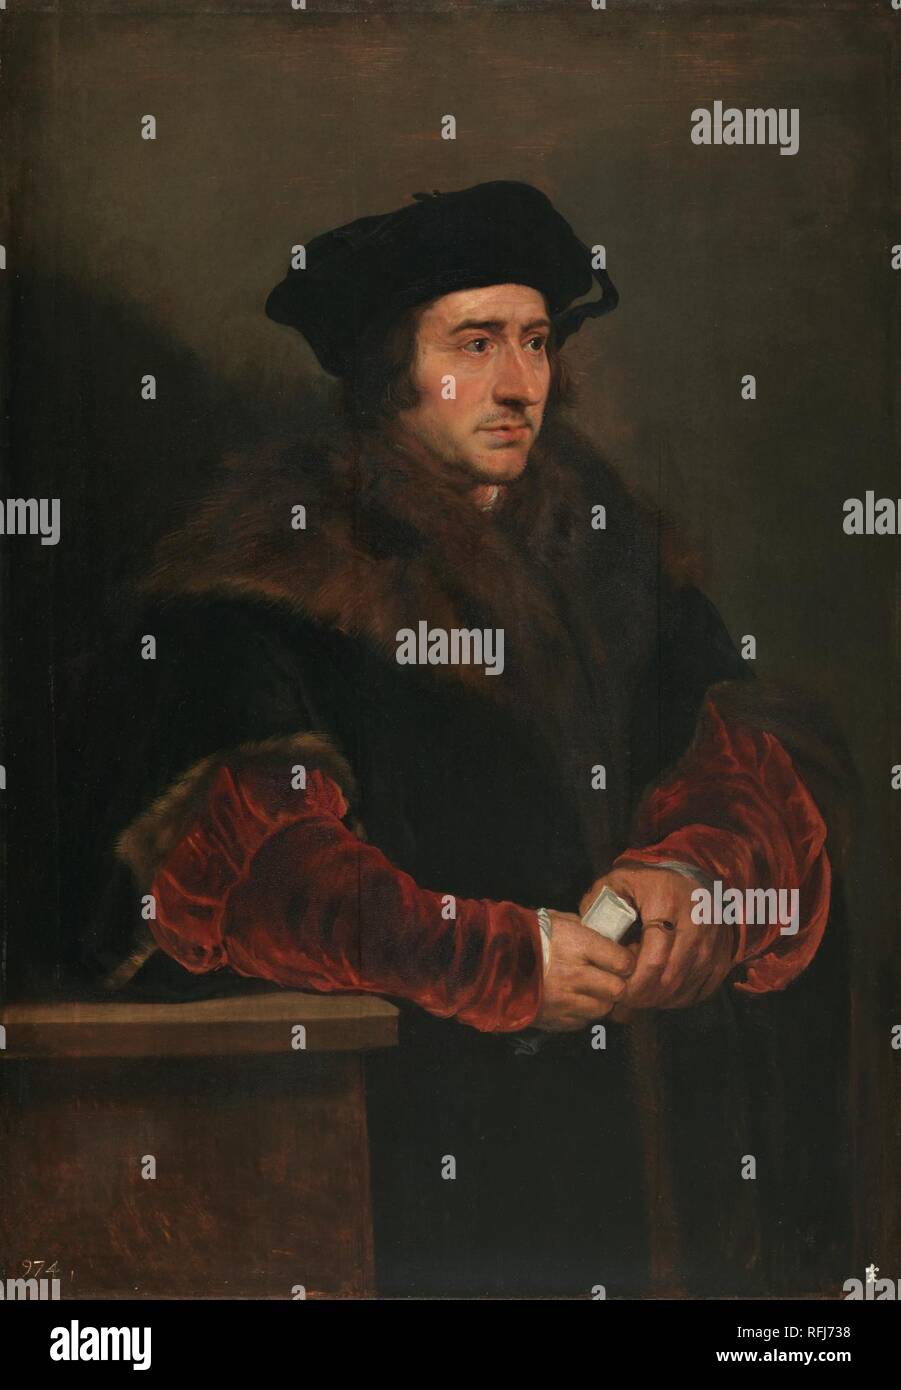 RUBENS, PIETER PAUL Siegen, Westfalia, 1577 - Amberes, 1640 Miniatura autor Sir Thomas More 1625 - 1630.jpg - RFJ738 Stock Photo